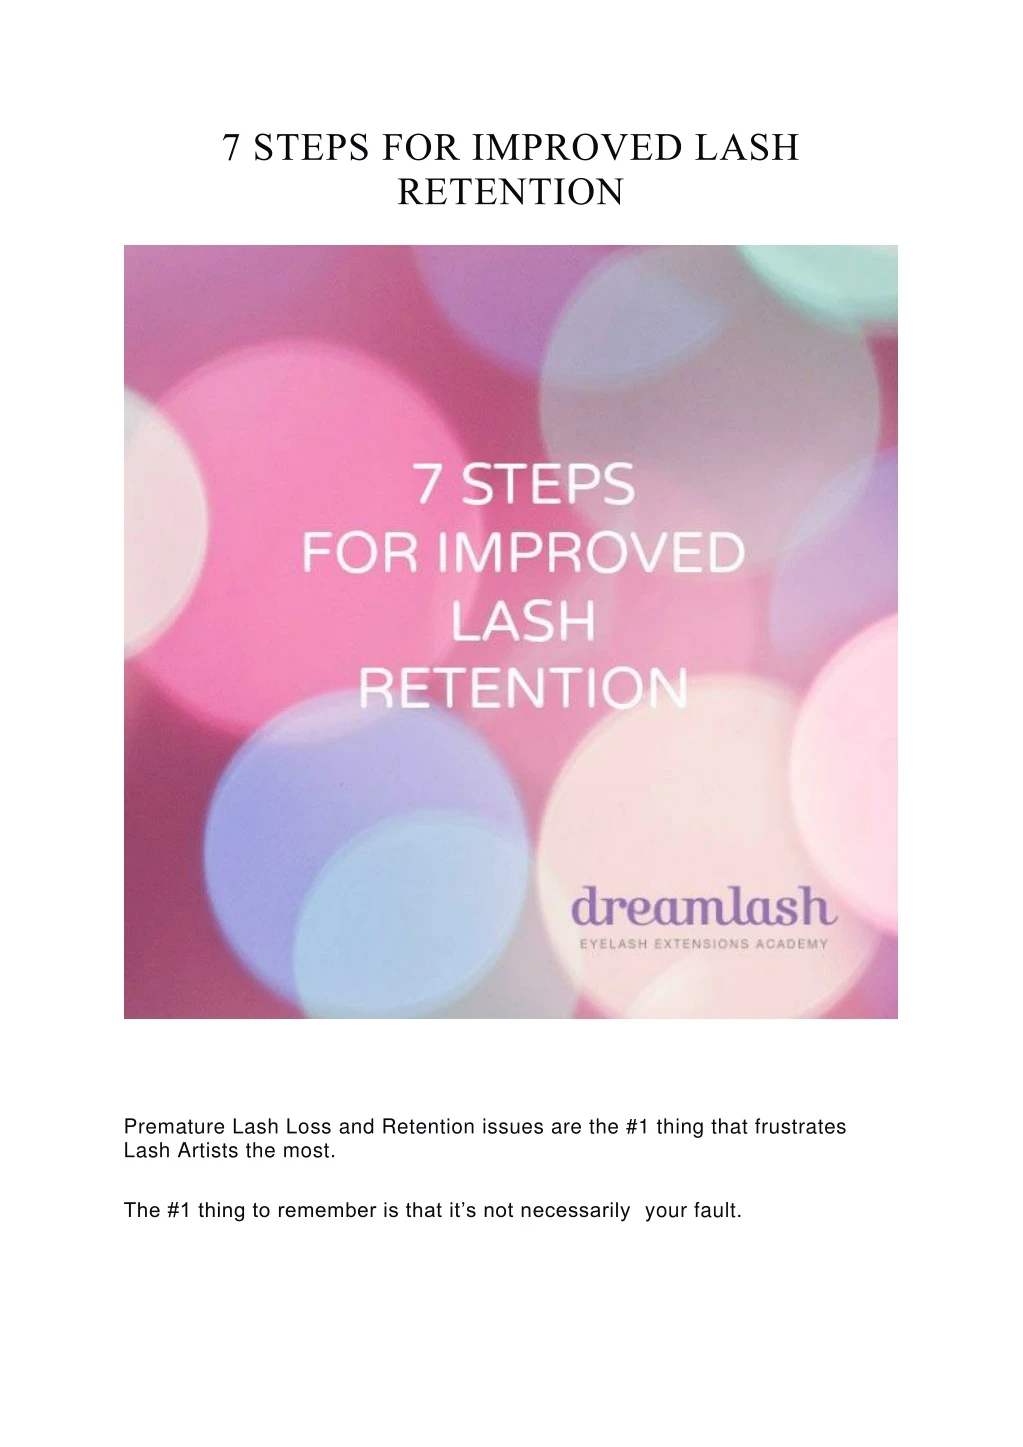 7 steps for improved lash retention